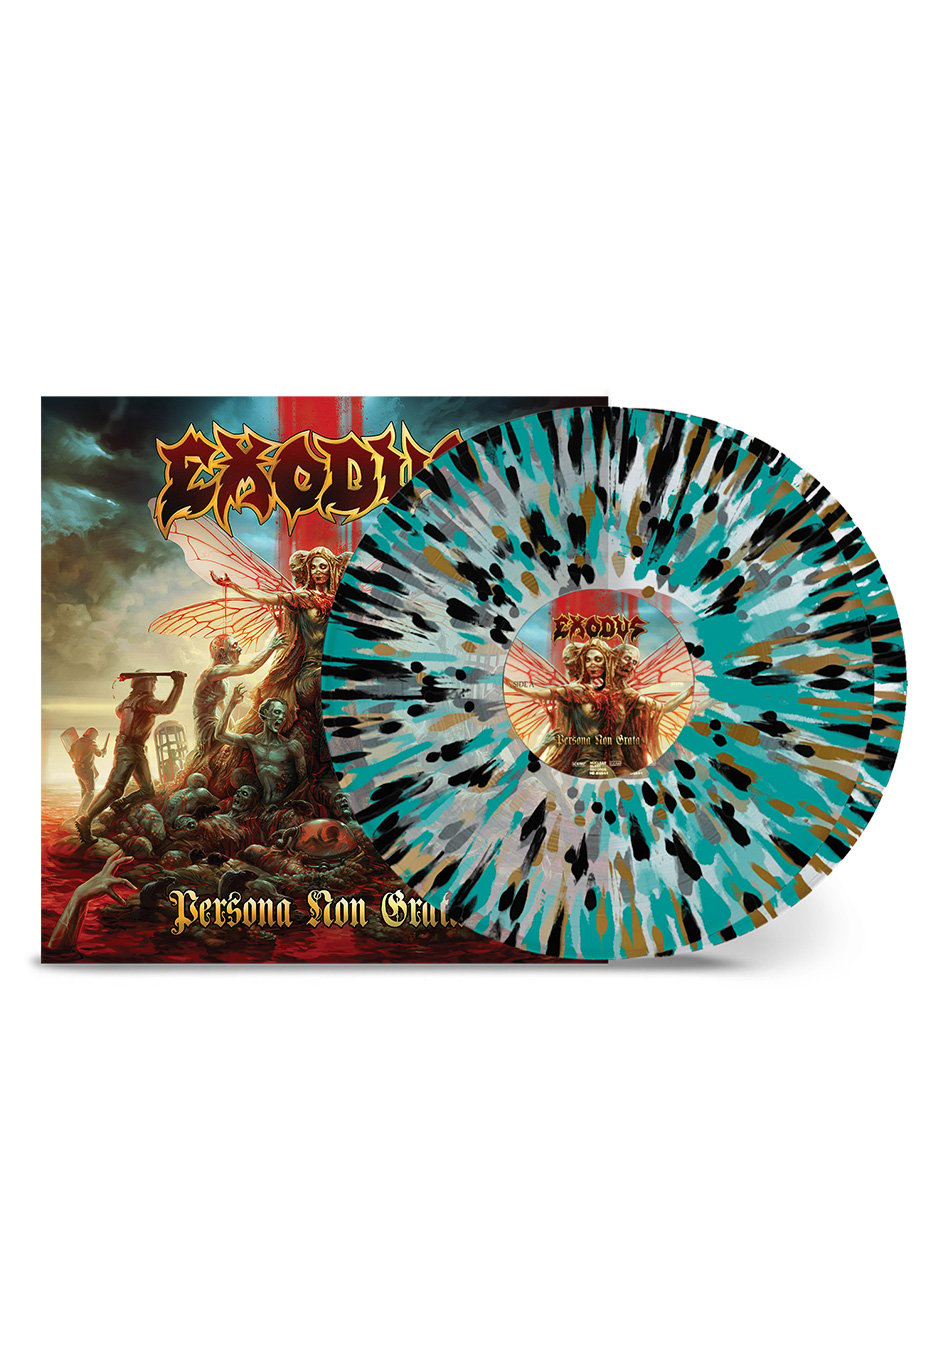 Exodus - Persona Non Grata Ltd. Clear/Gold/Black/Turquise - Splatter 2 Vinyl